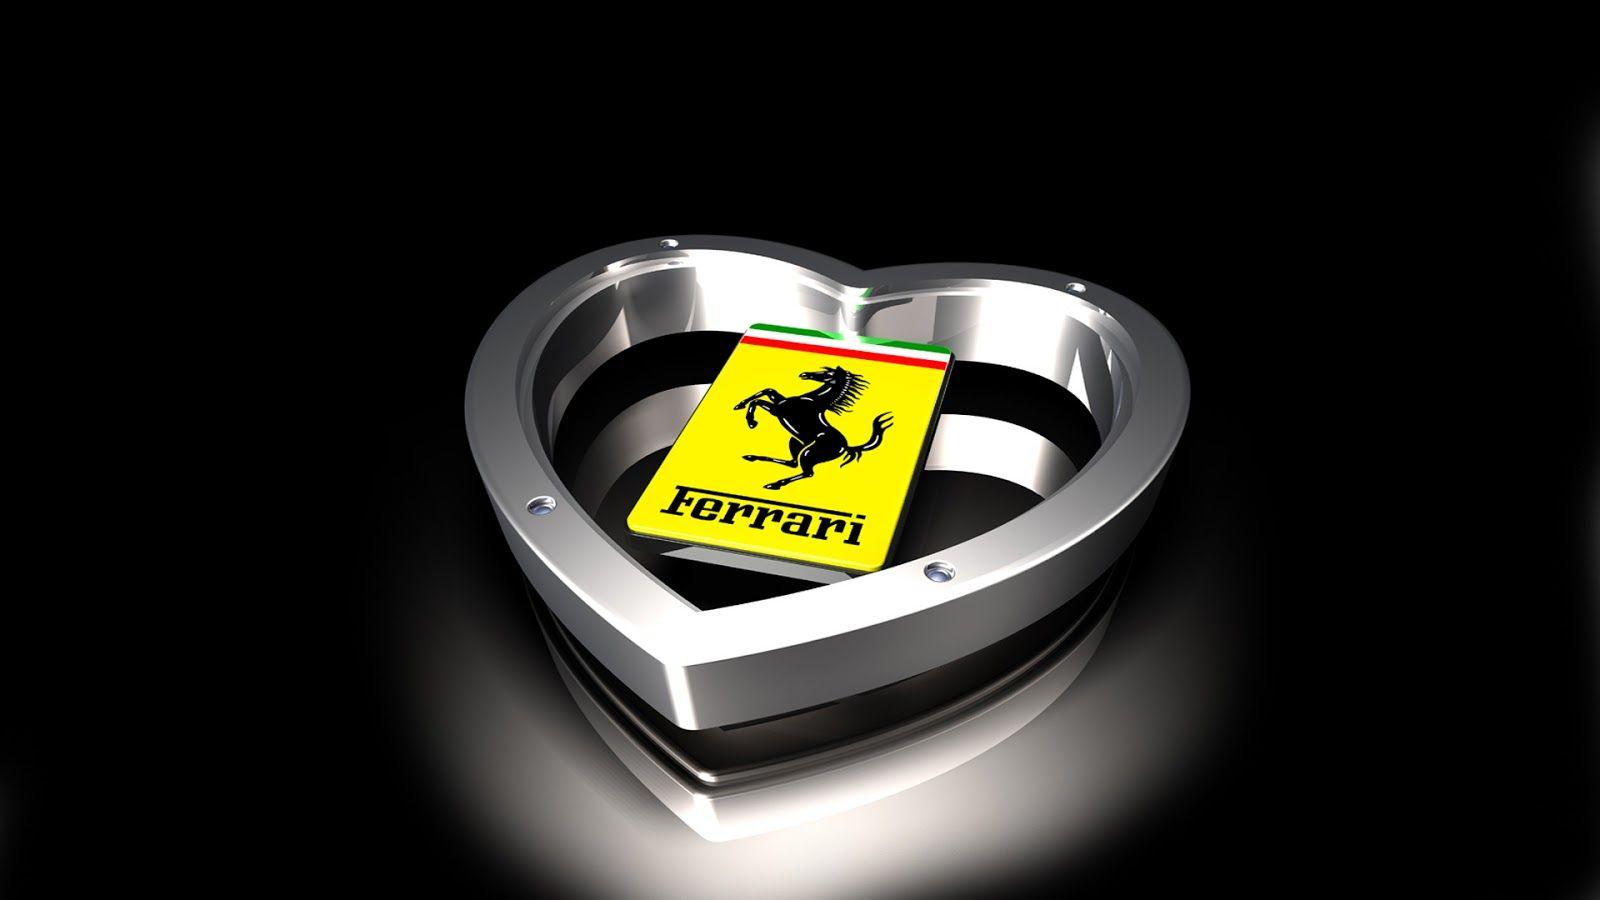 Ferrari Wallpaper Logo For iPhone Free Download > SubWallpaper